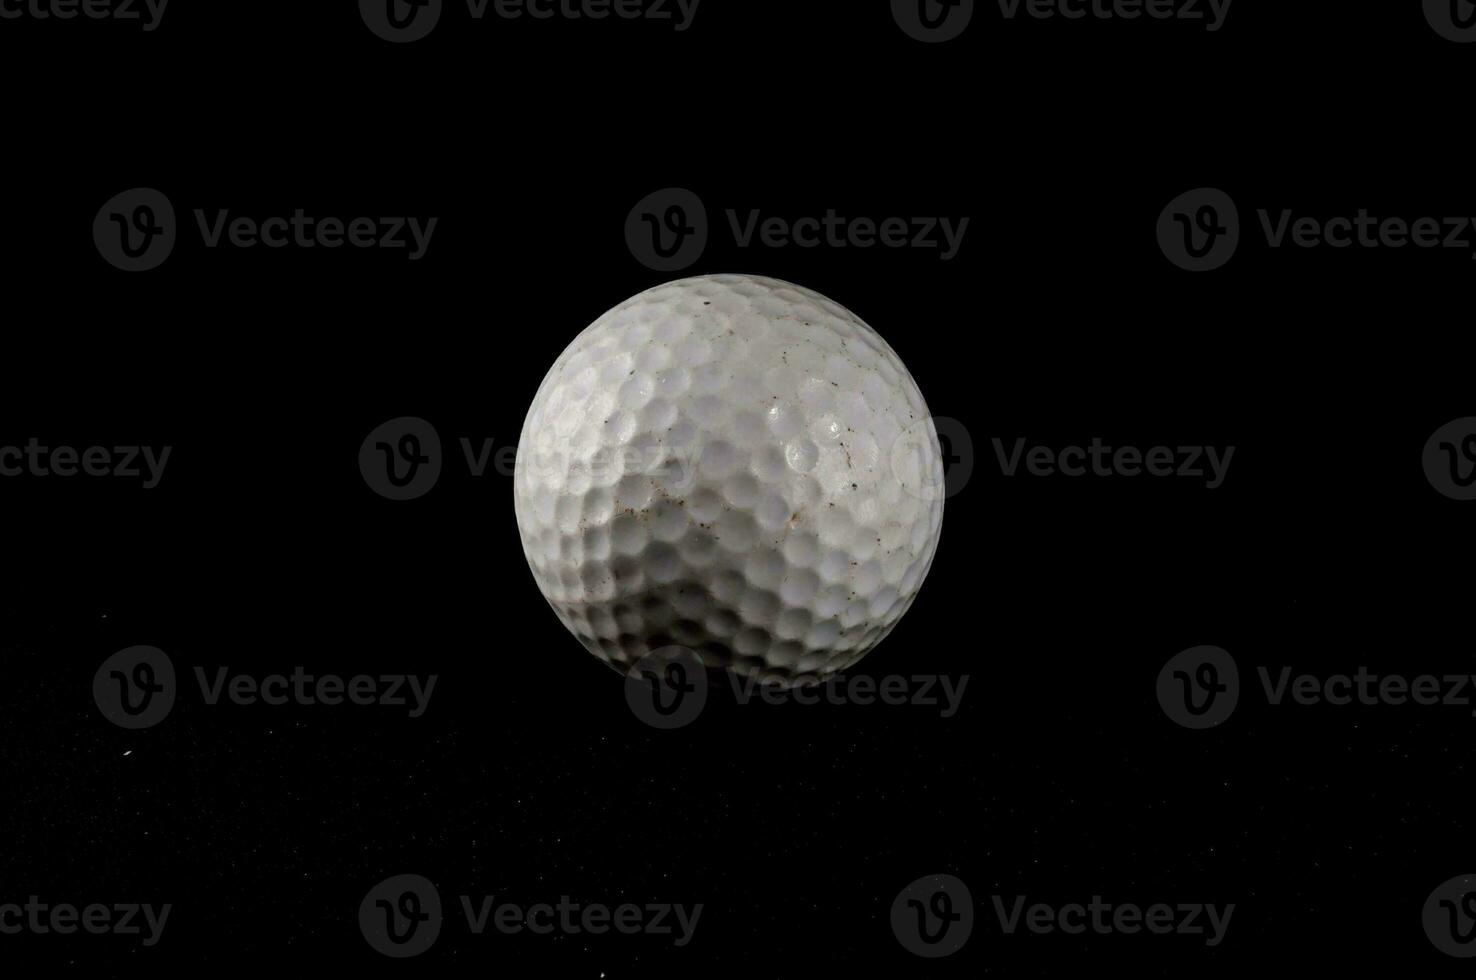 a golf ball on a black background photo